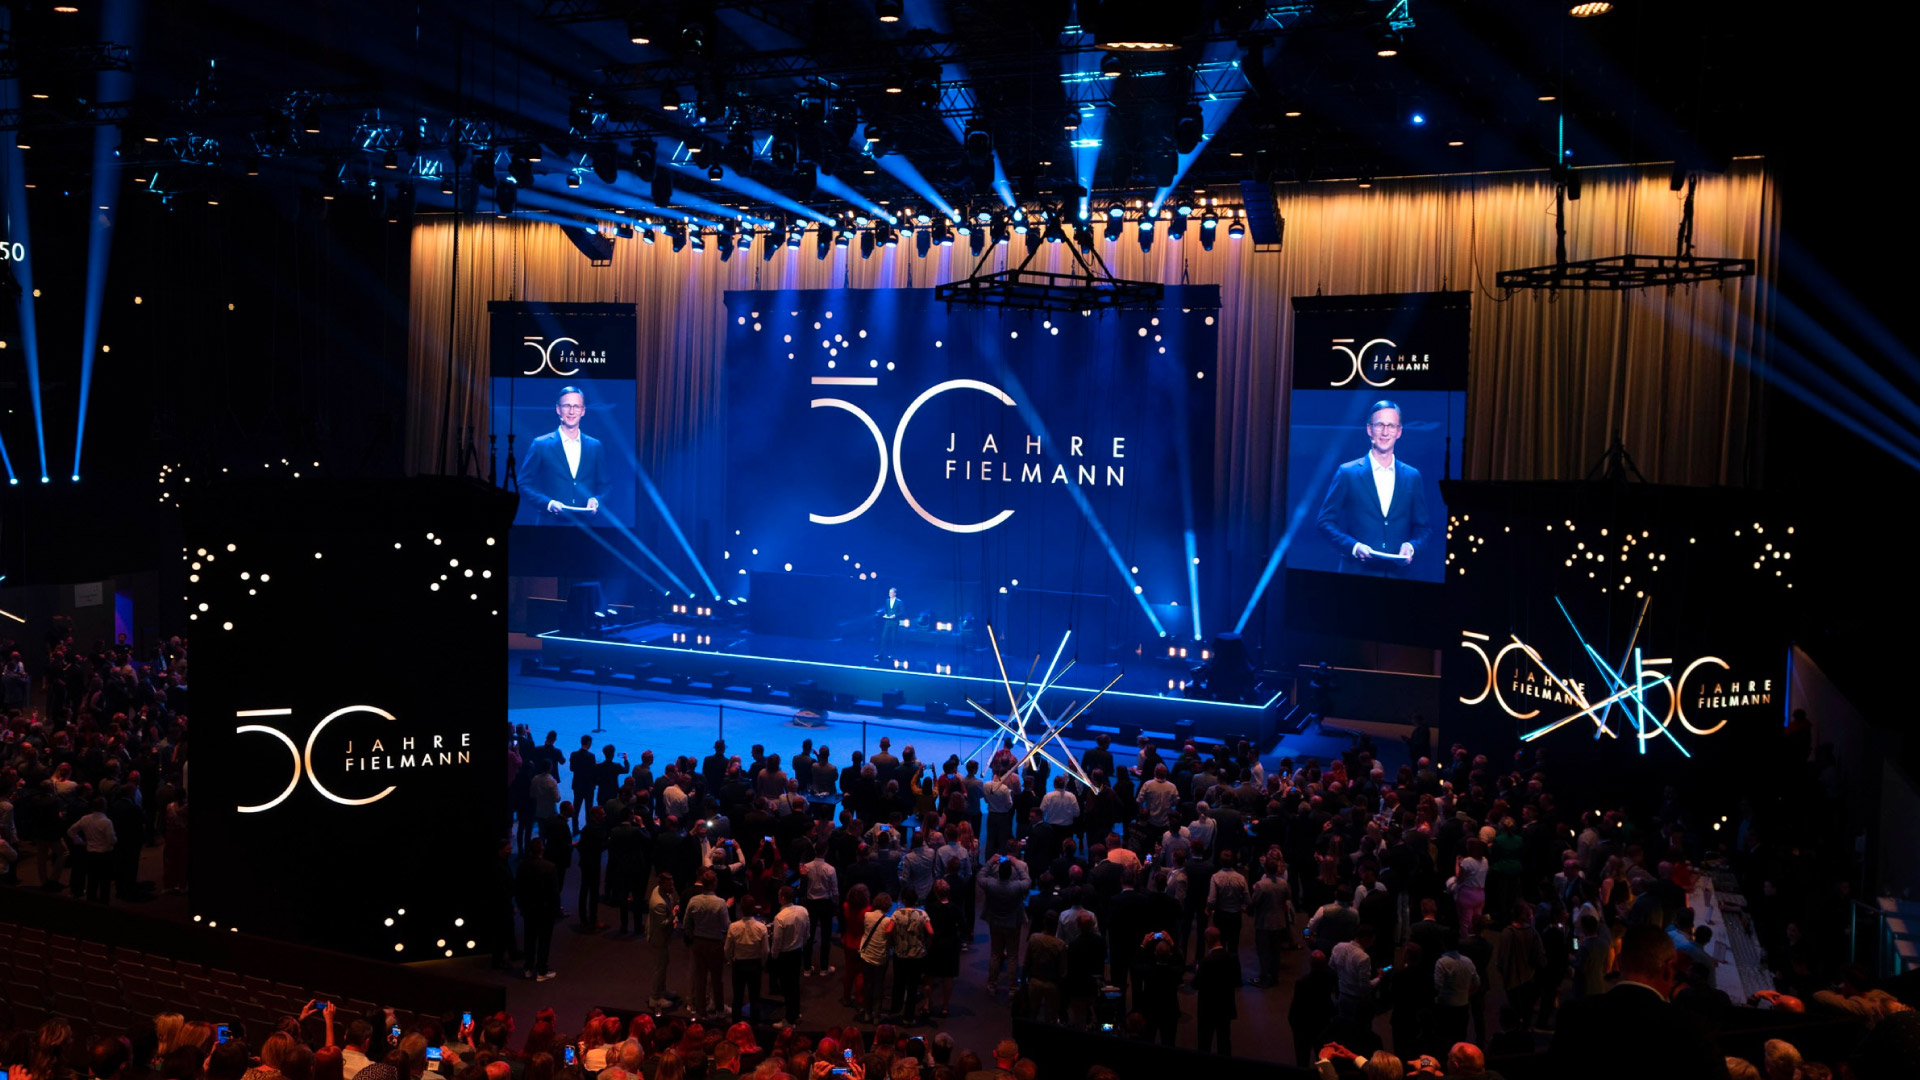 Fielmann 50 jaar jubileum